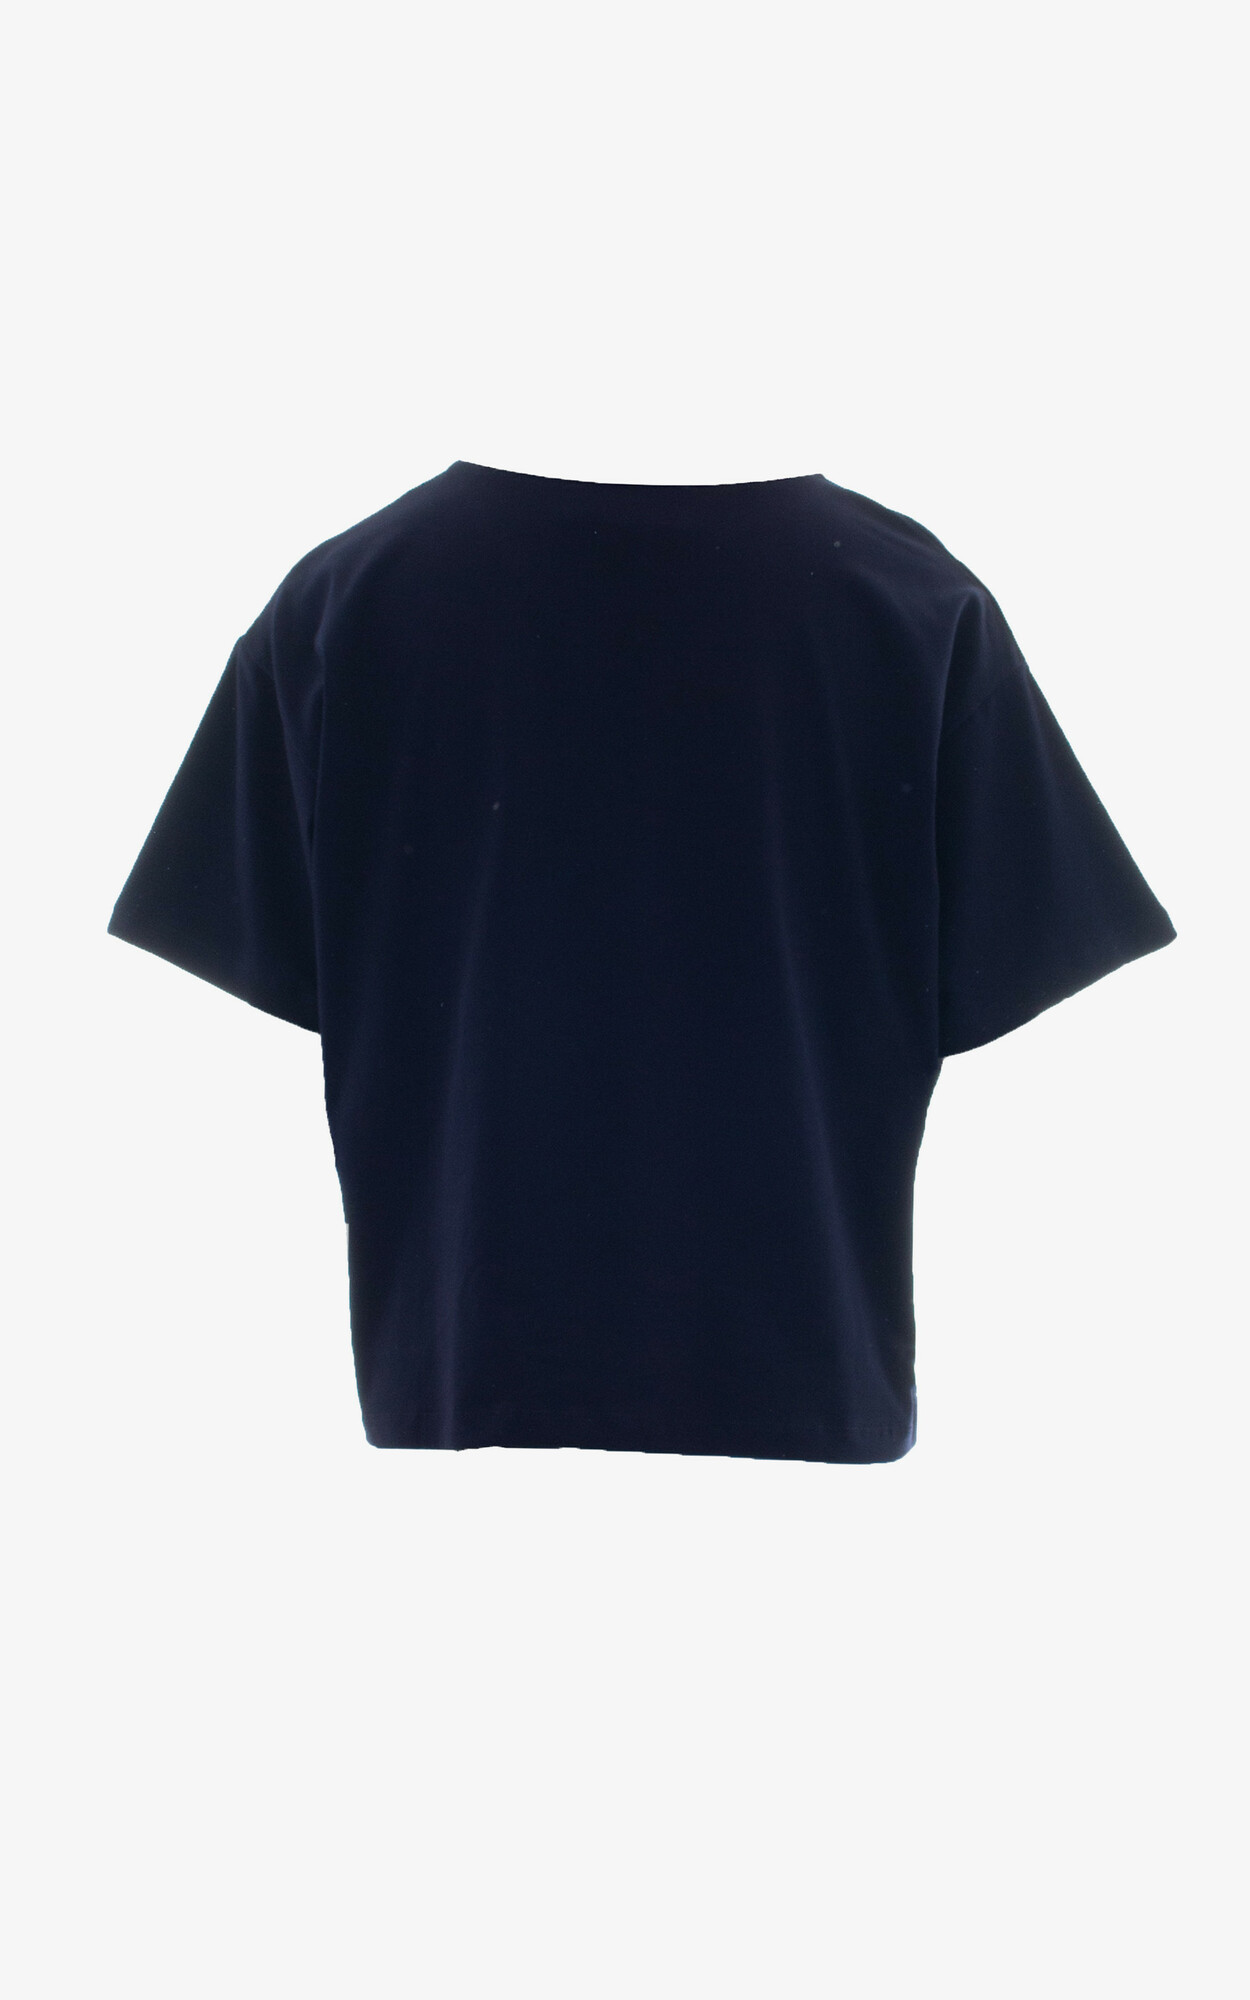 Donkerblauw T-shirt/top